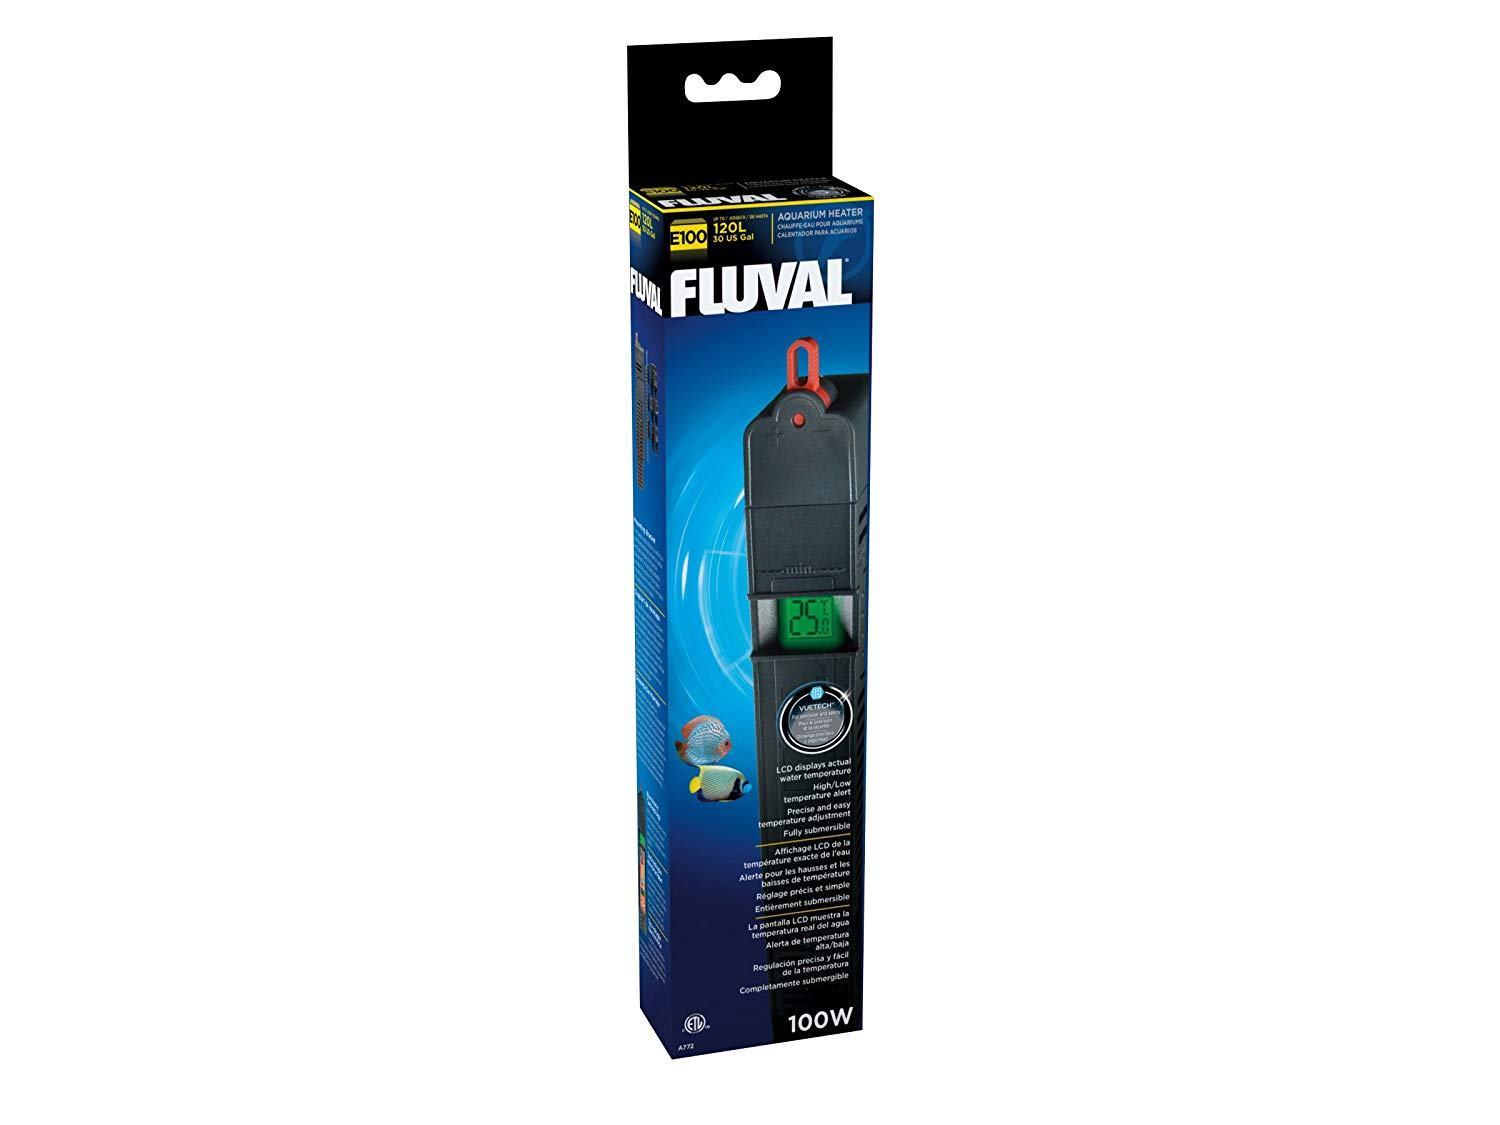 Fluval E Electronic Heater